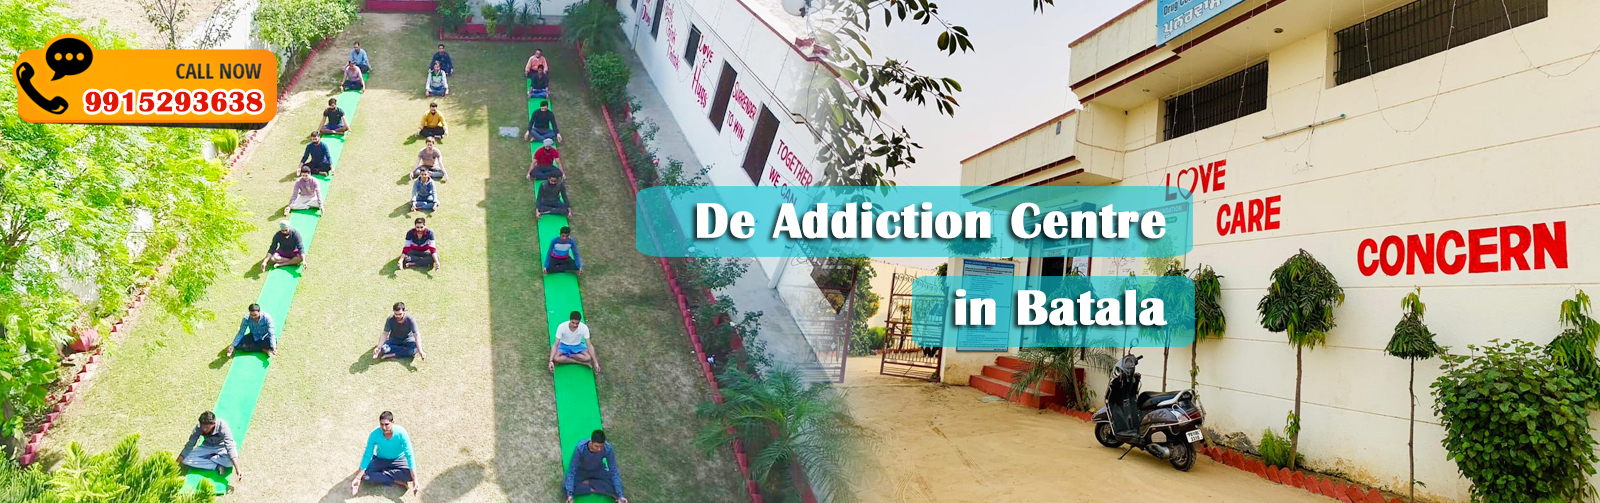 De Addiction Centre in Batala